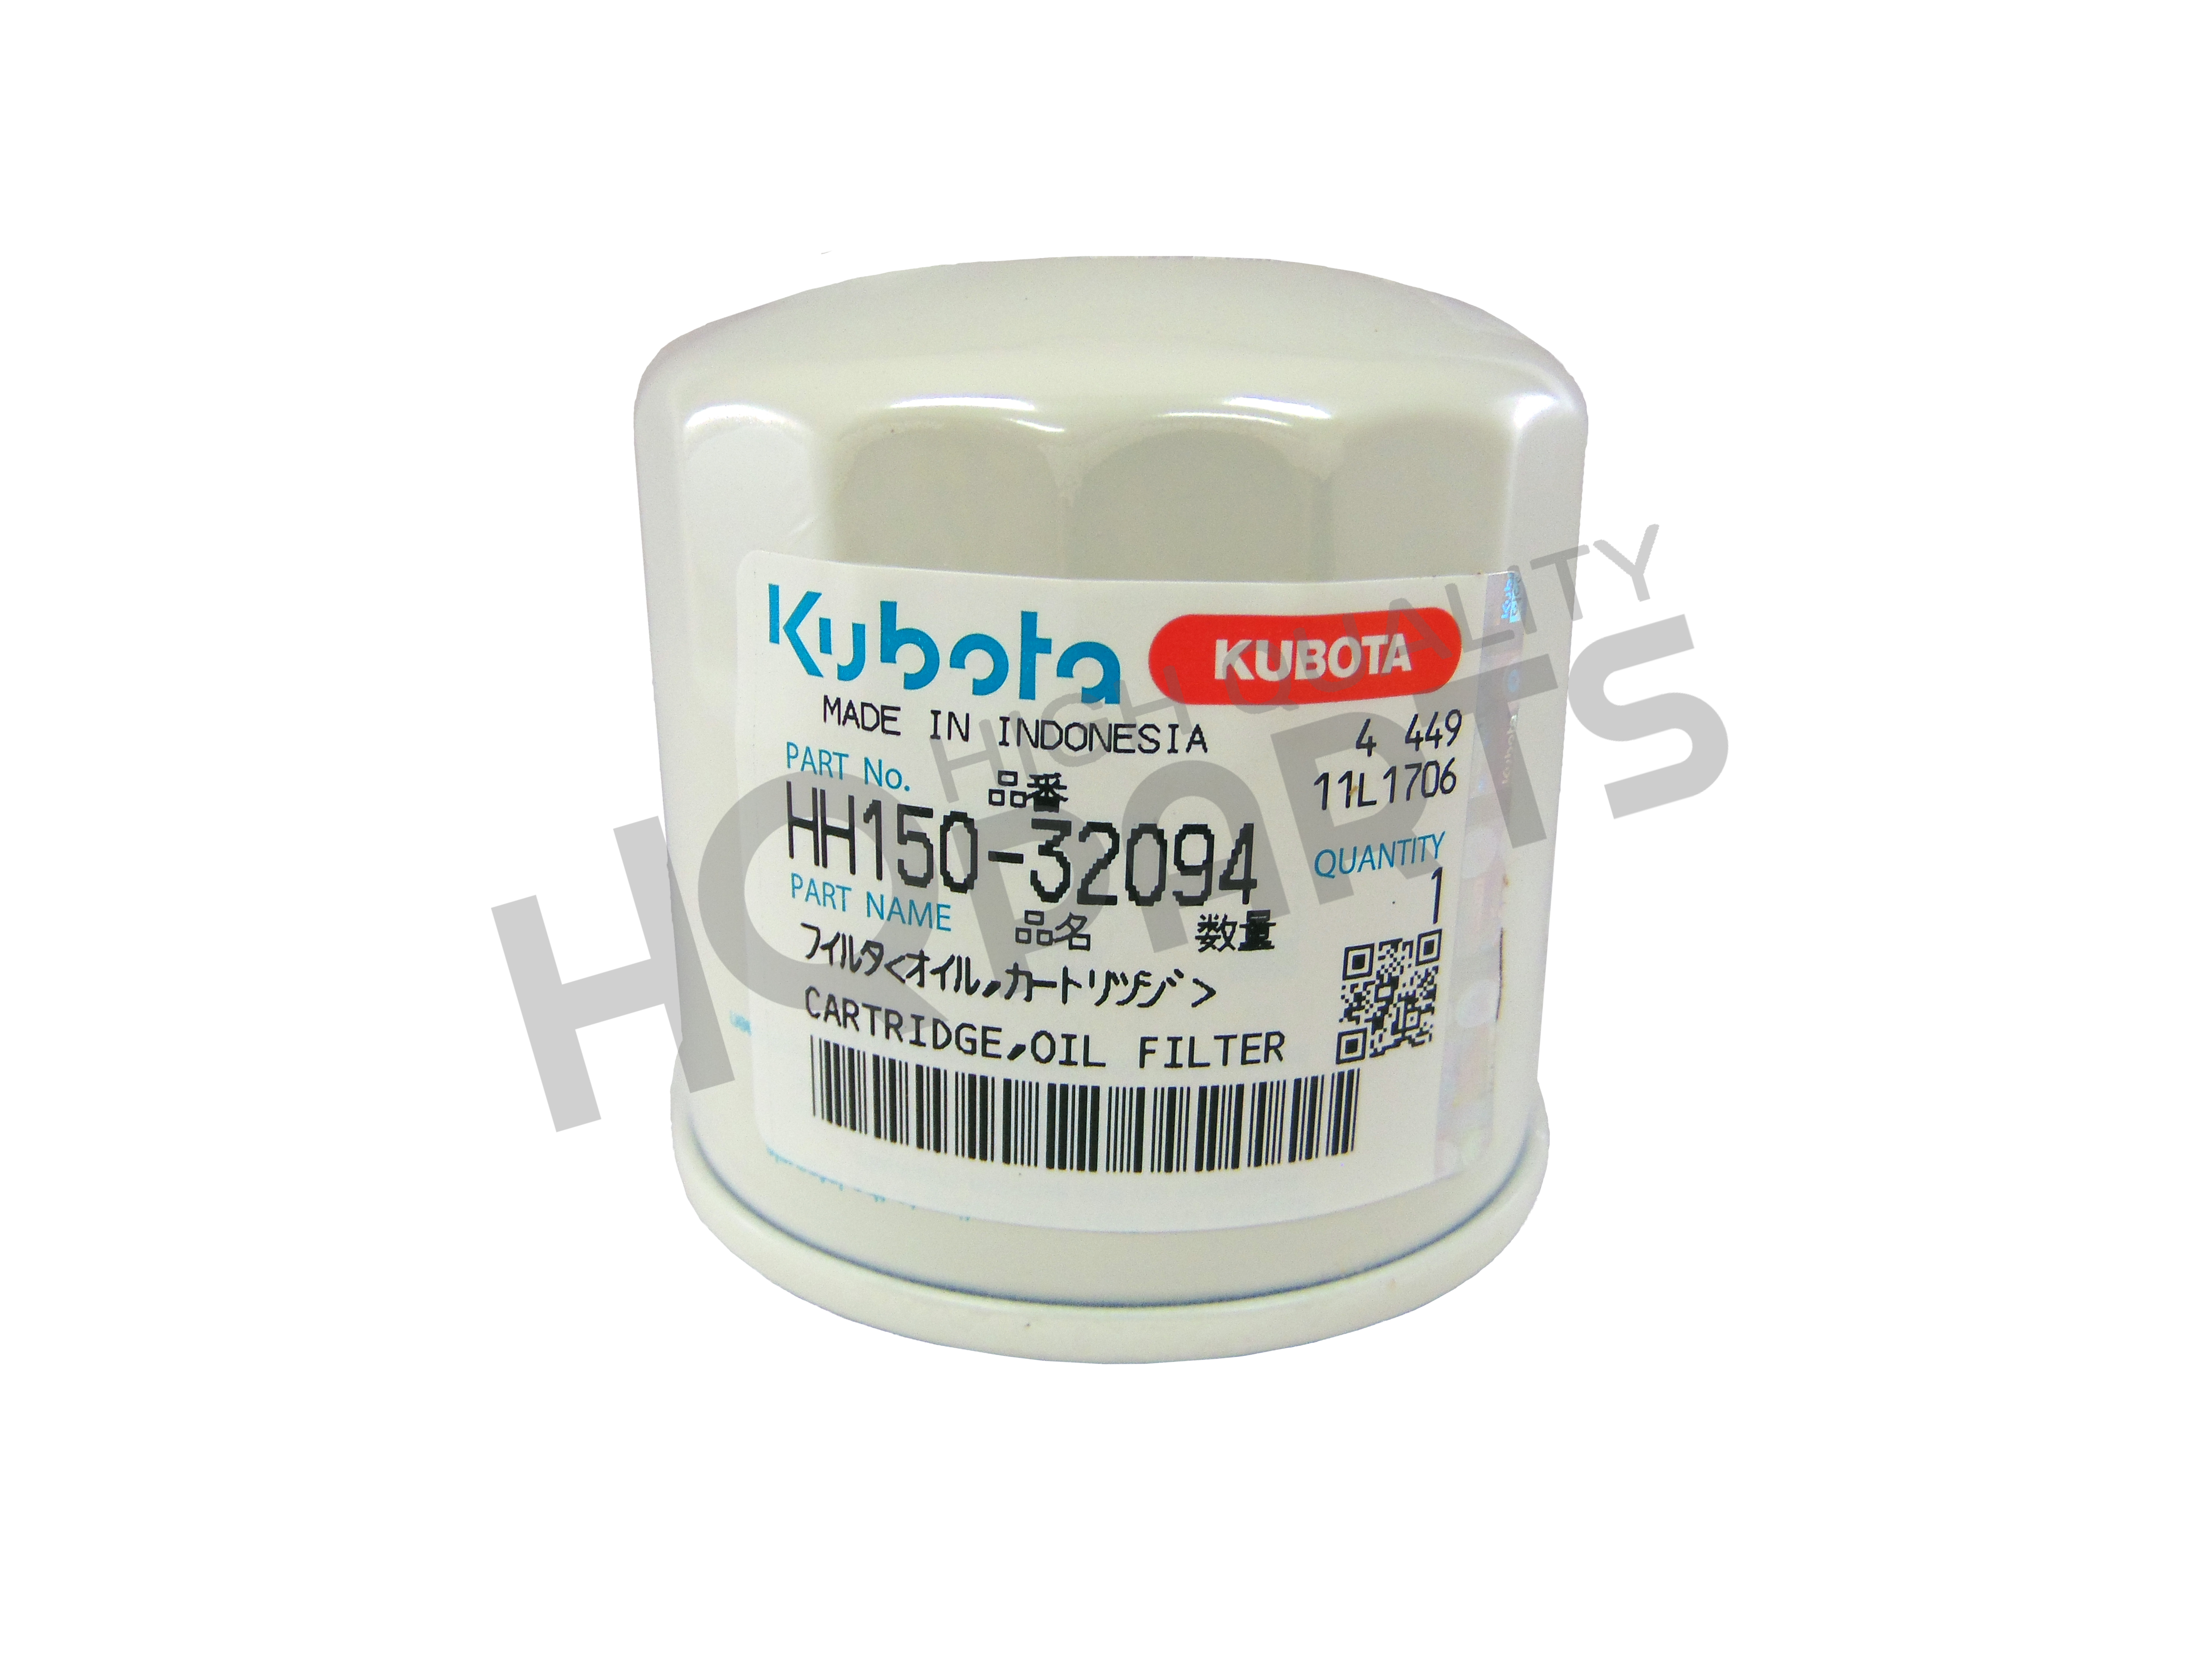 Kubota Oil Filter Hh150 32094 Cross Reference Chart